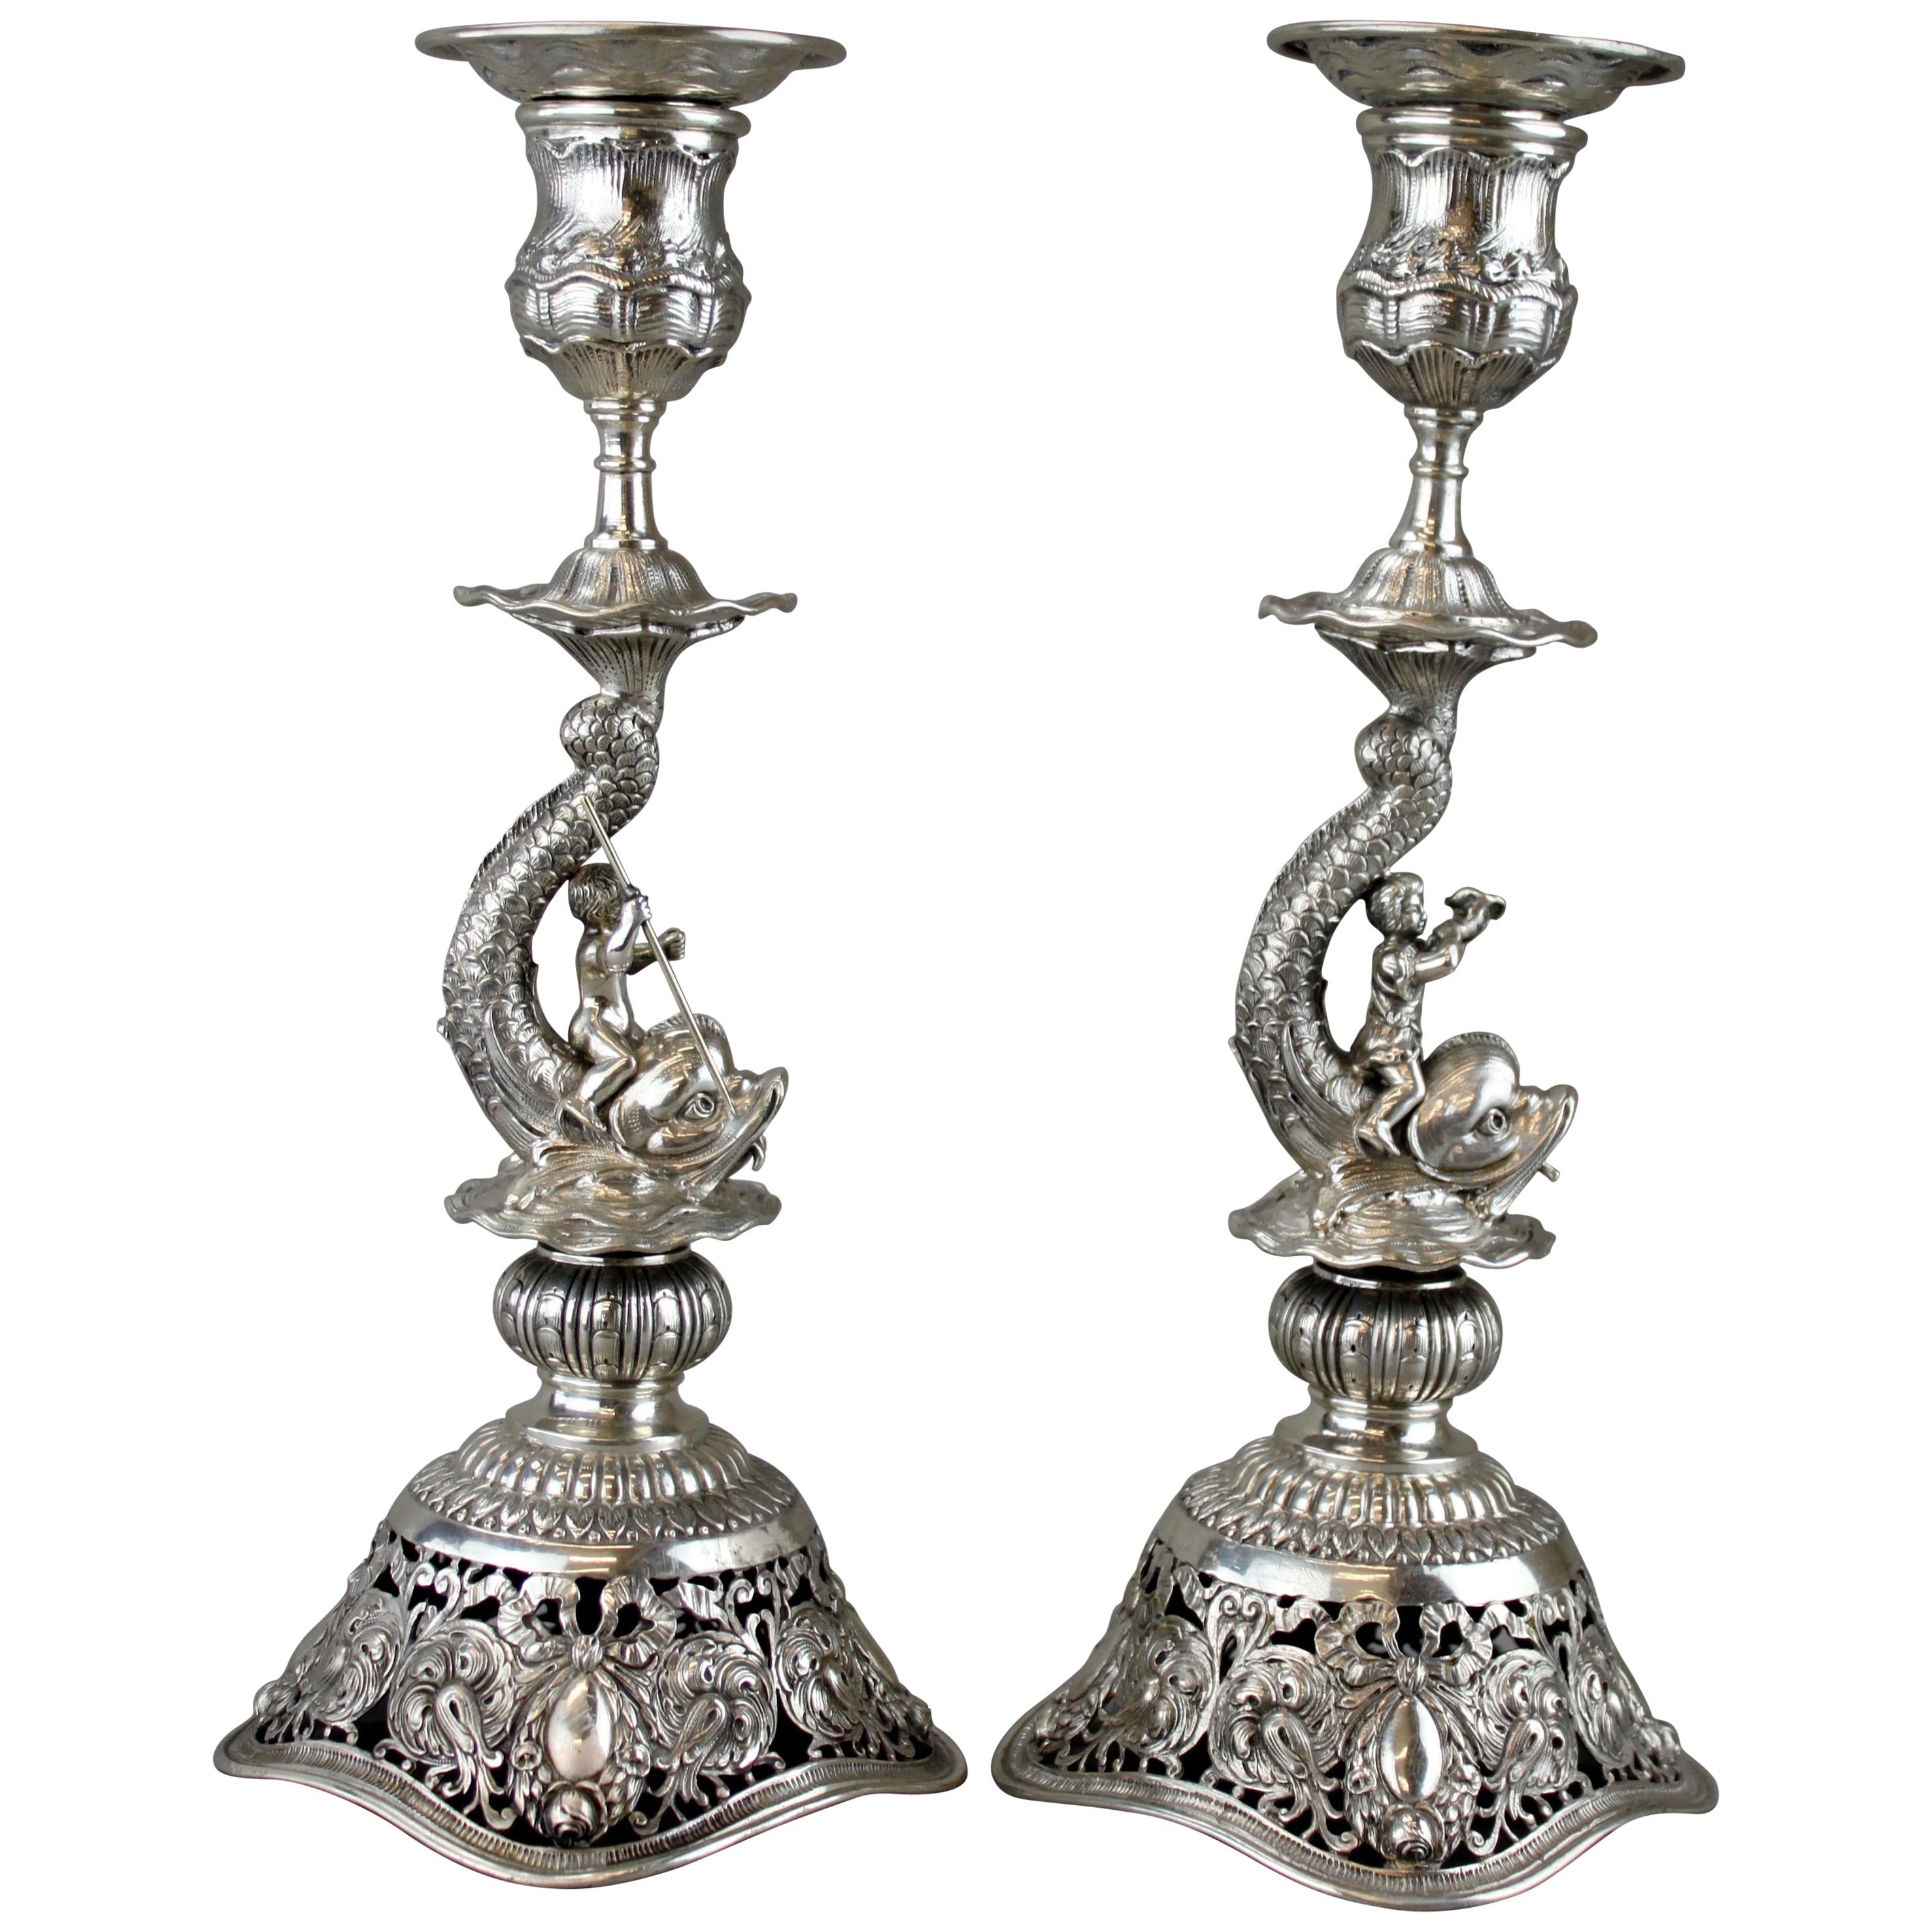 German Hanau Silver Pair of Candlesticks, Georg Roth & Co, 19th Century